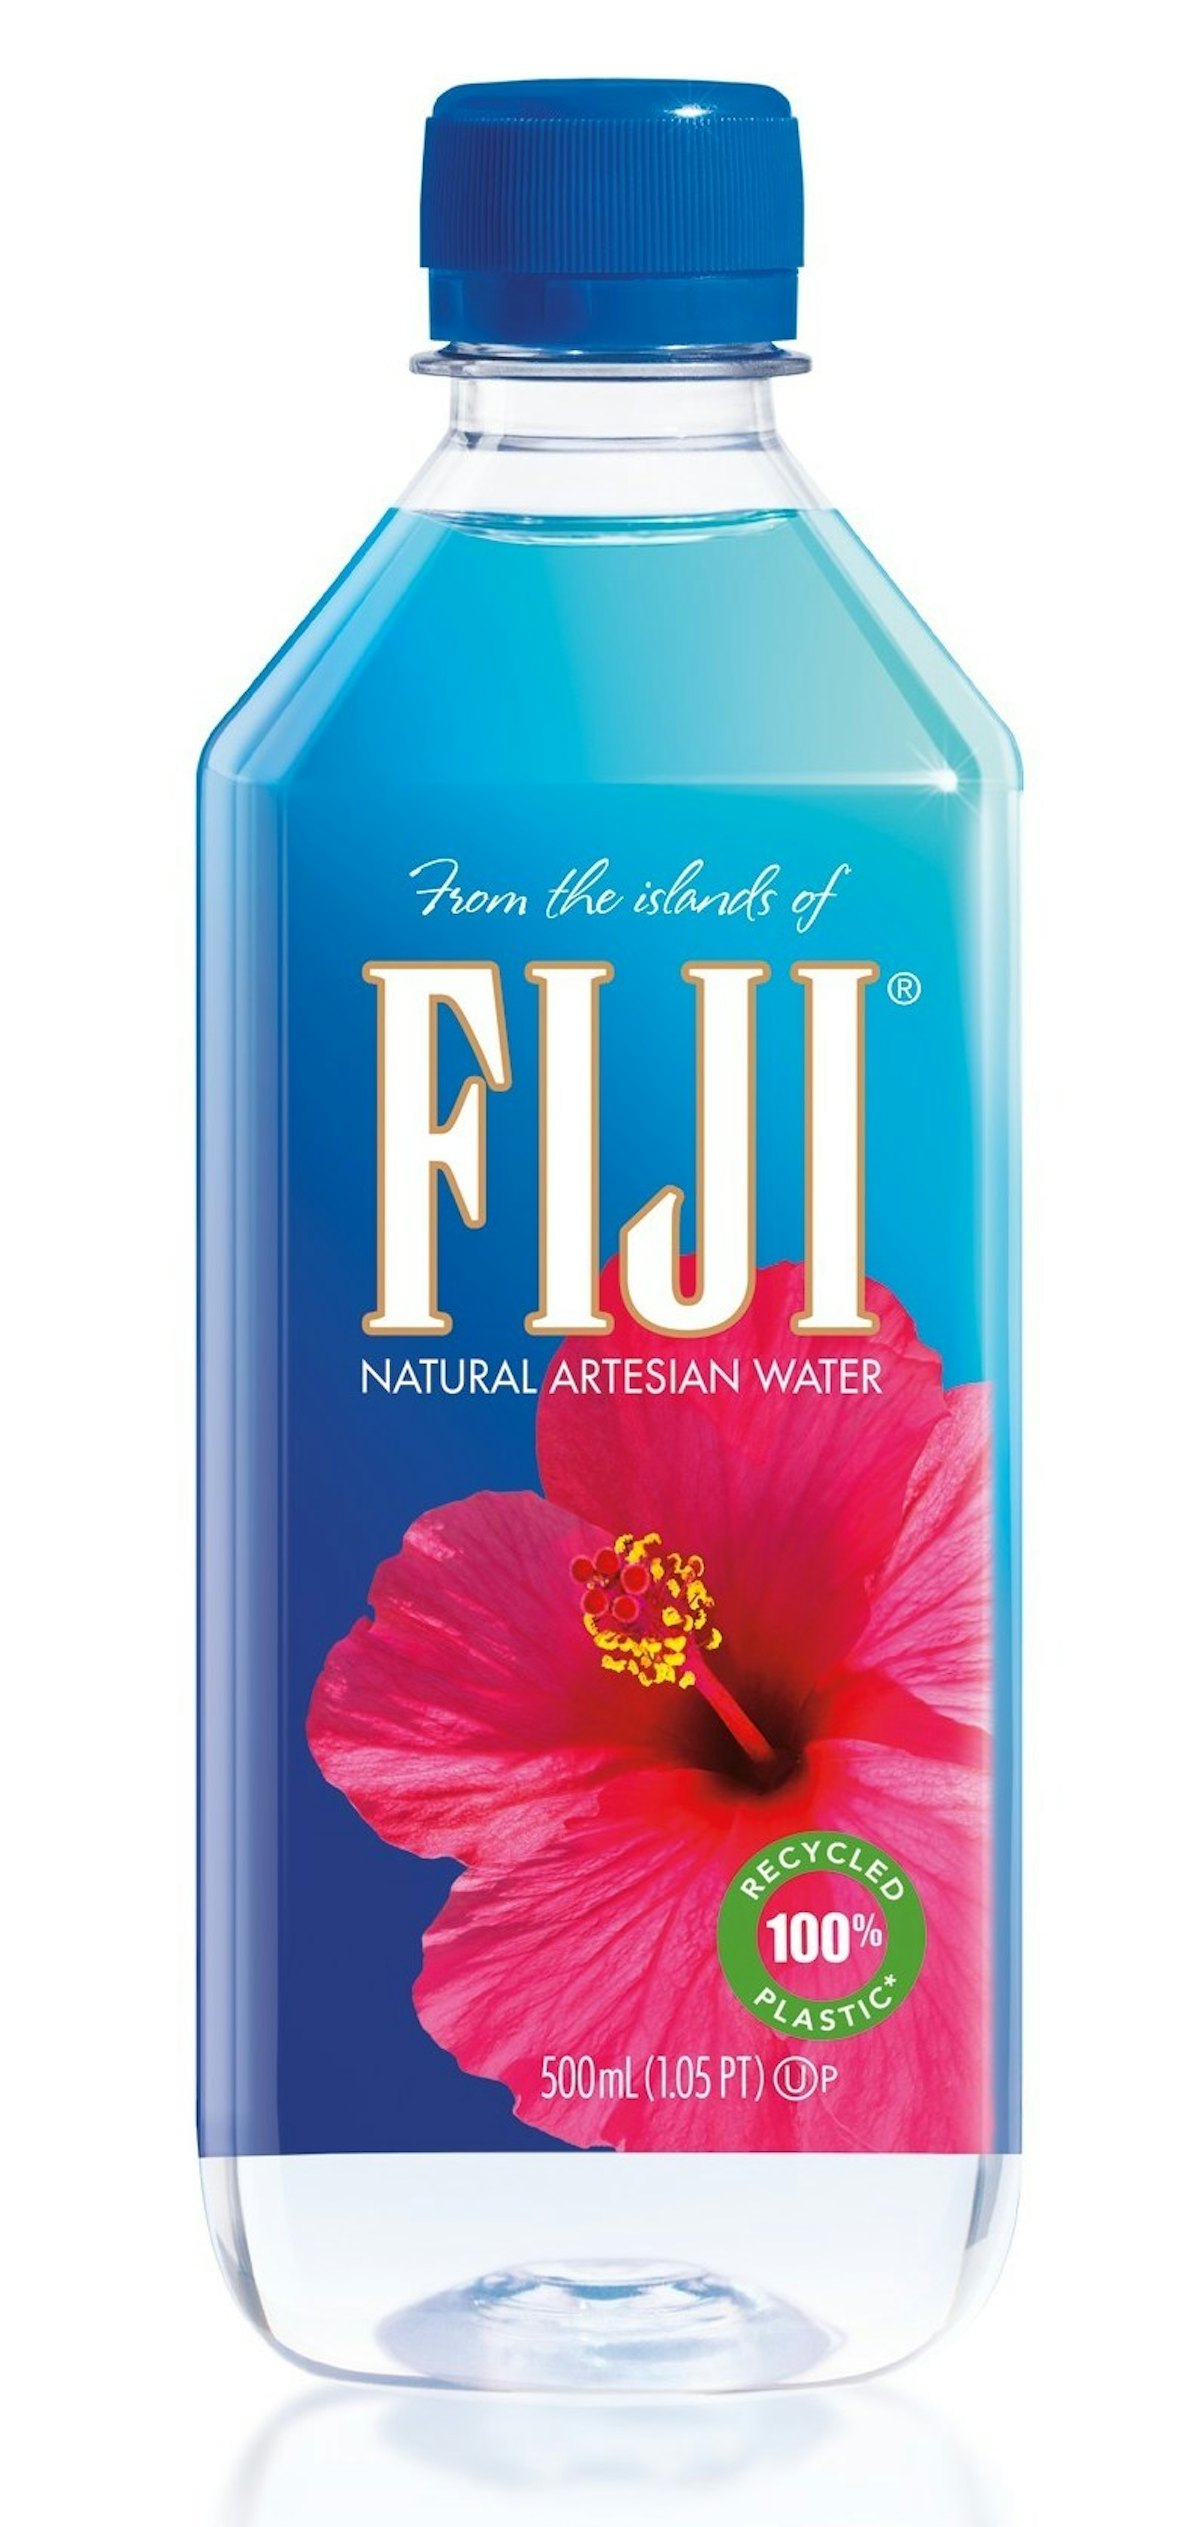 https://img.packworld.com/files/base/pmmi/all/image/2022/09/Fiji_Water_web.631a6a8f8d991.png?auto=format%2Ccompress&fit=max&q=70&w=1200